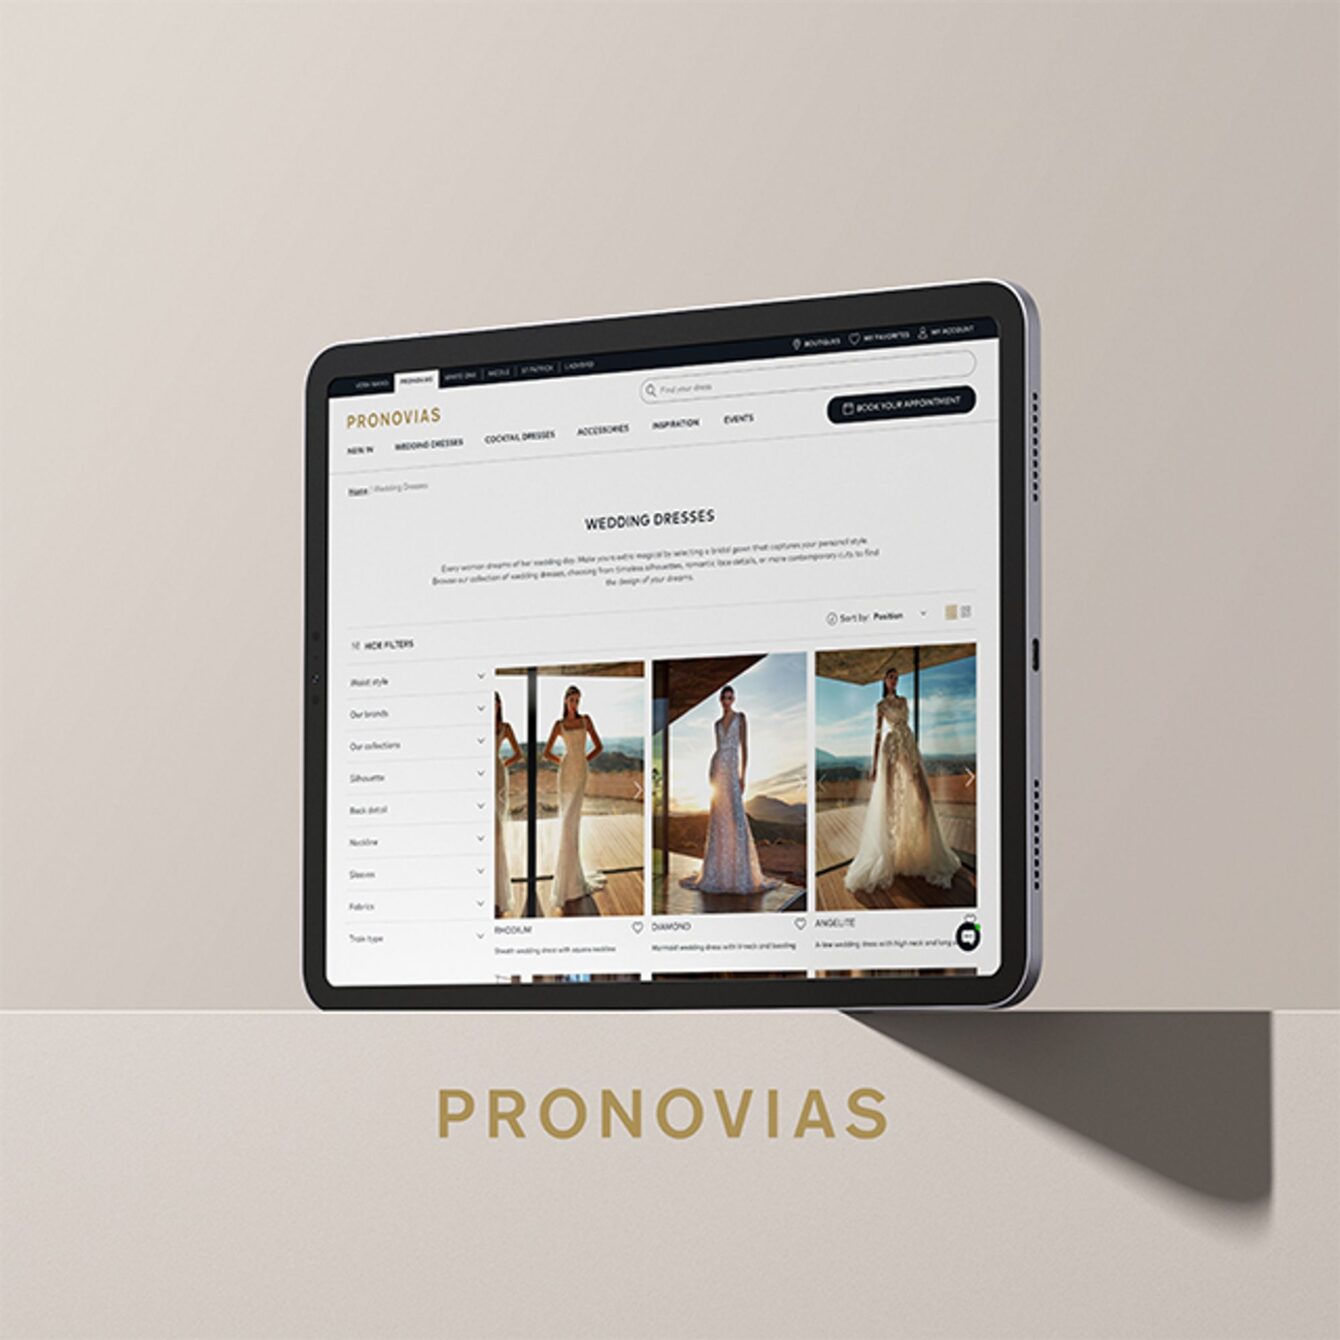 Image of Pronovias website on an ipad screen